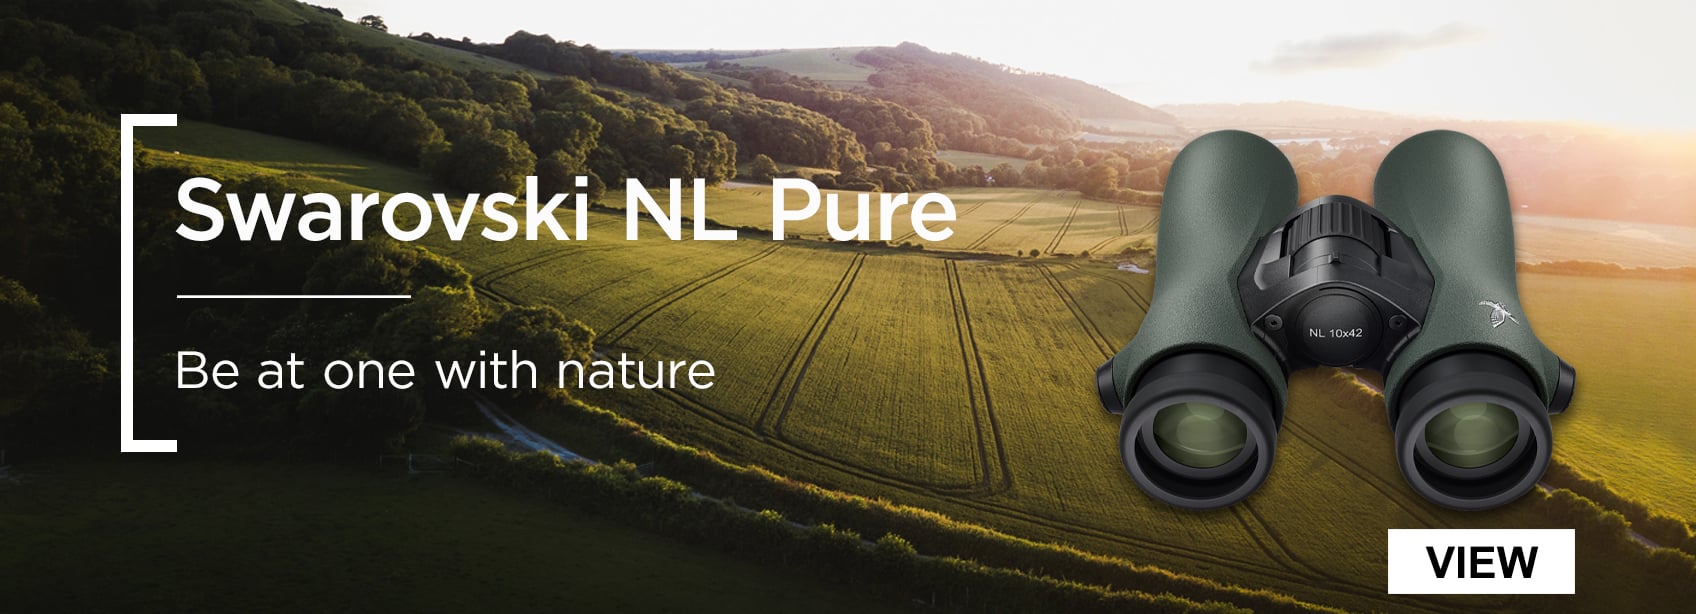 Class leading Field of View, radical ergonomics | The new Swarovski NL Pure sets new standards